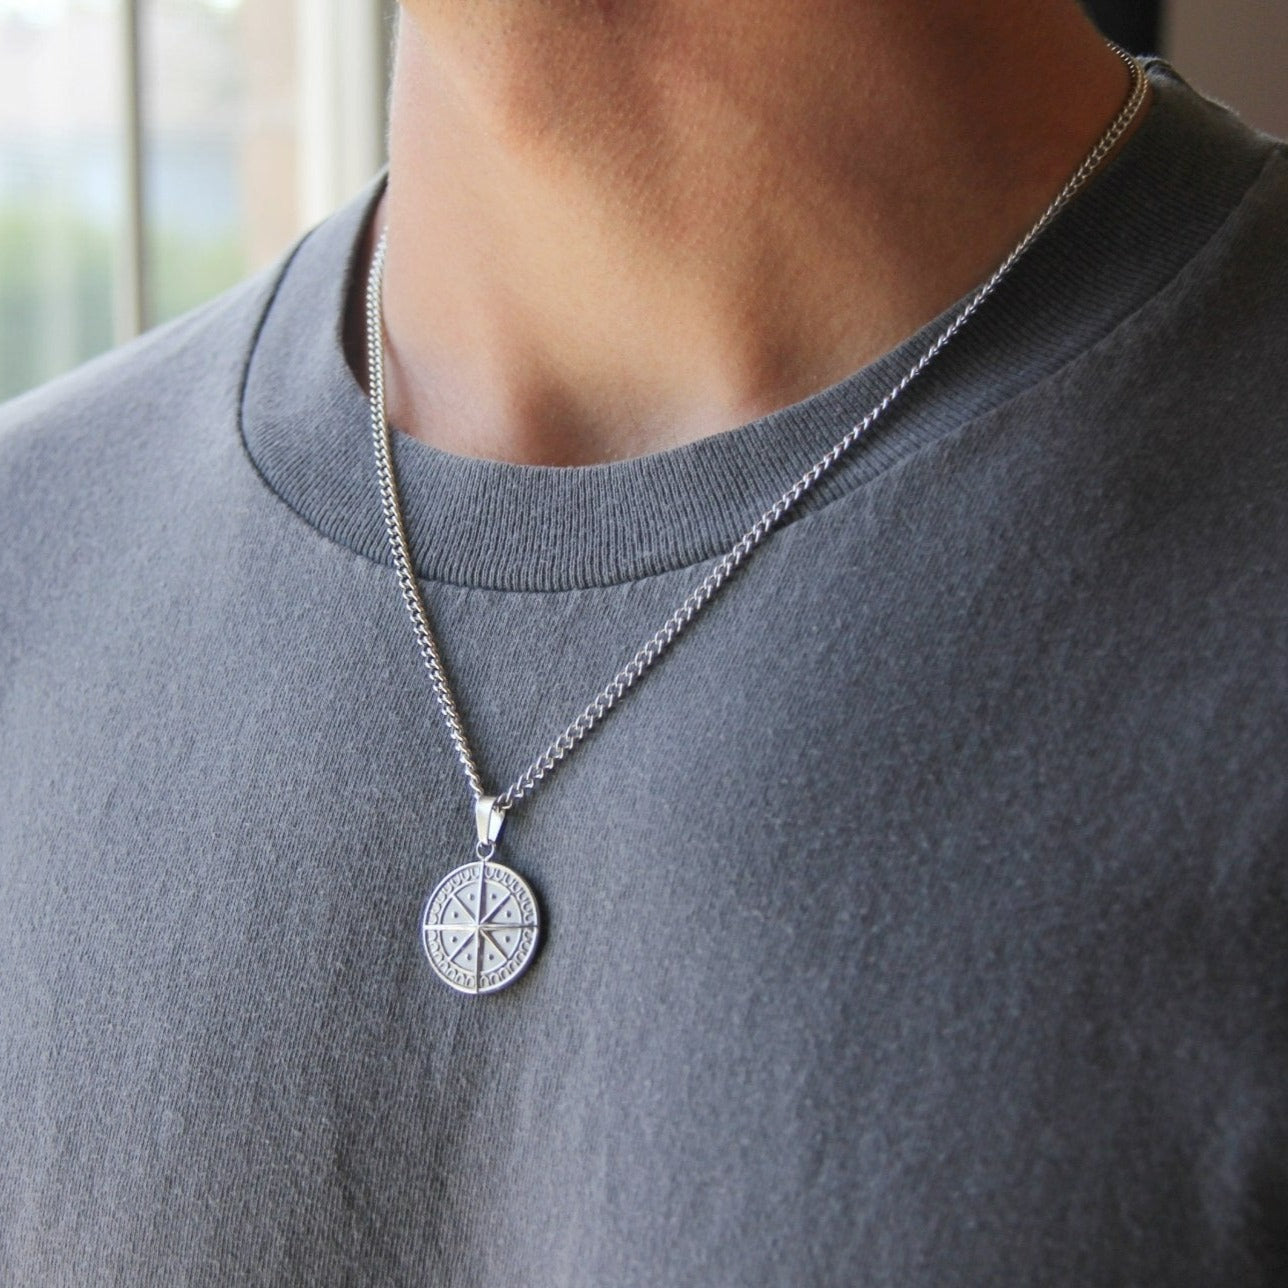 Silver Compass Pendant Necklace For Men or Women - Necklace - Boutique Wear RENN